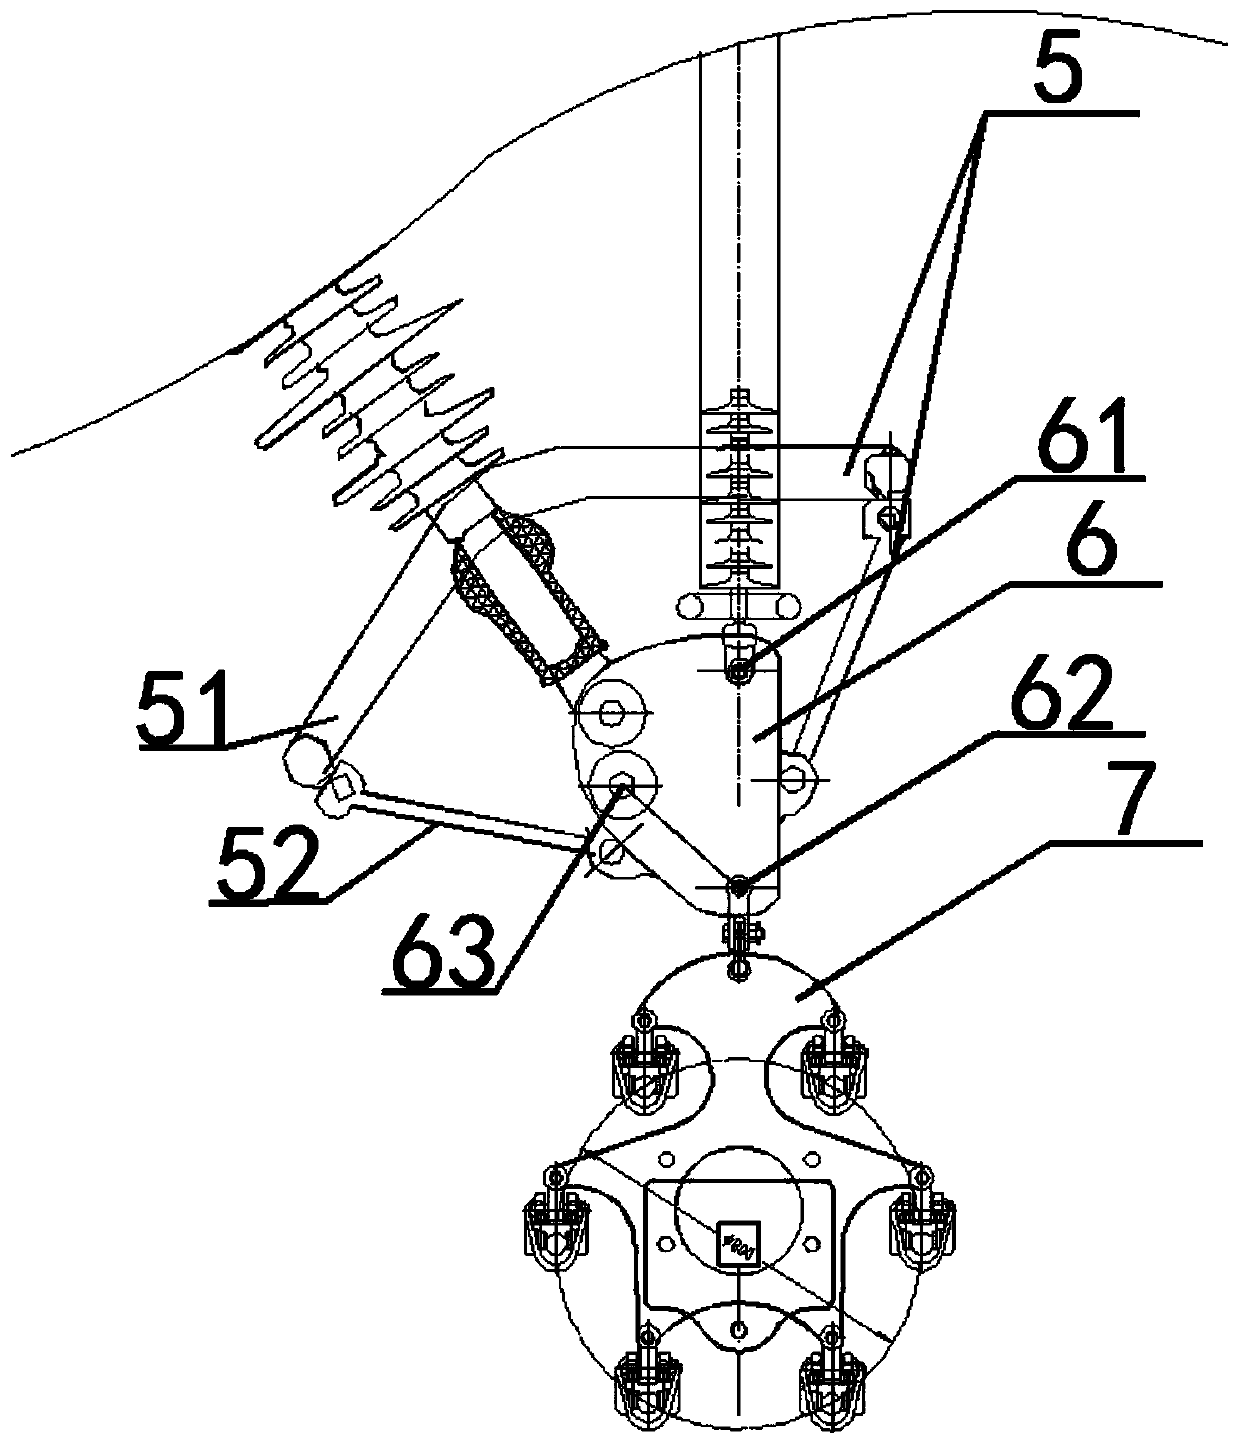 Half-V-shaped suspension string for preventing windage yaw